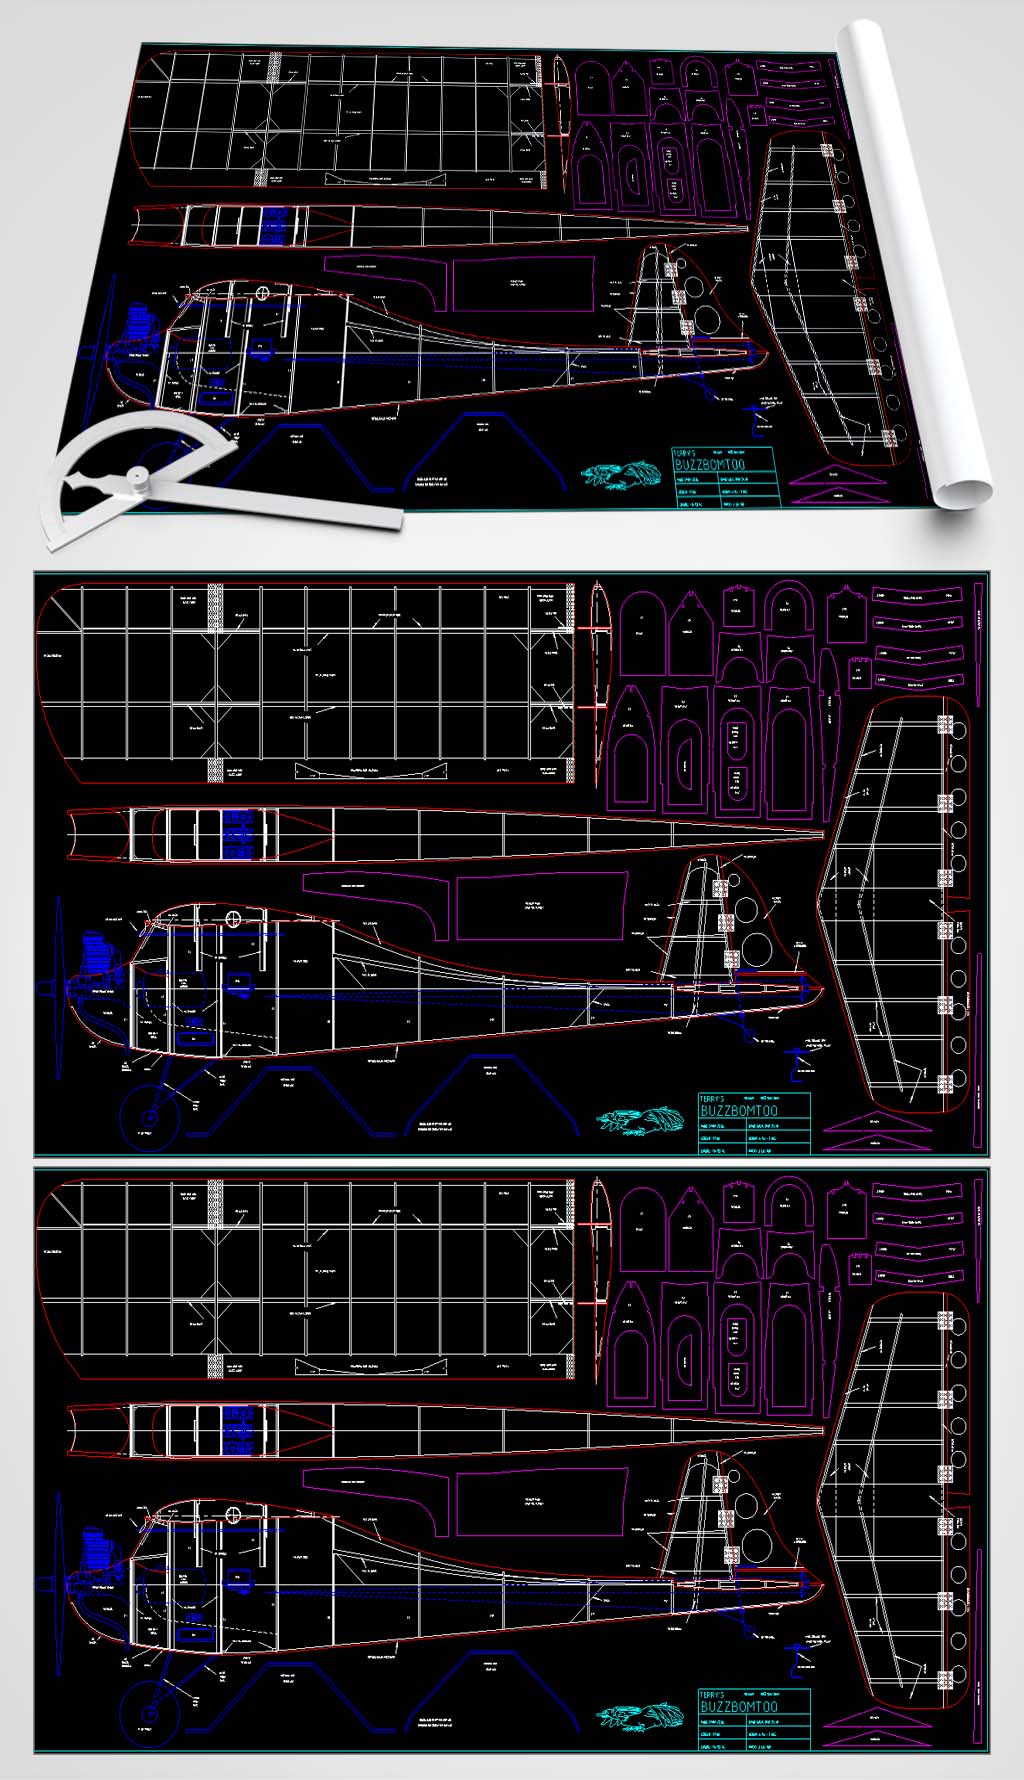 nx12工程图模板制作图片